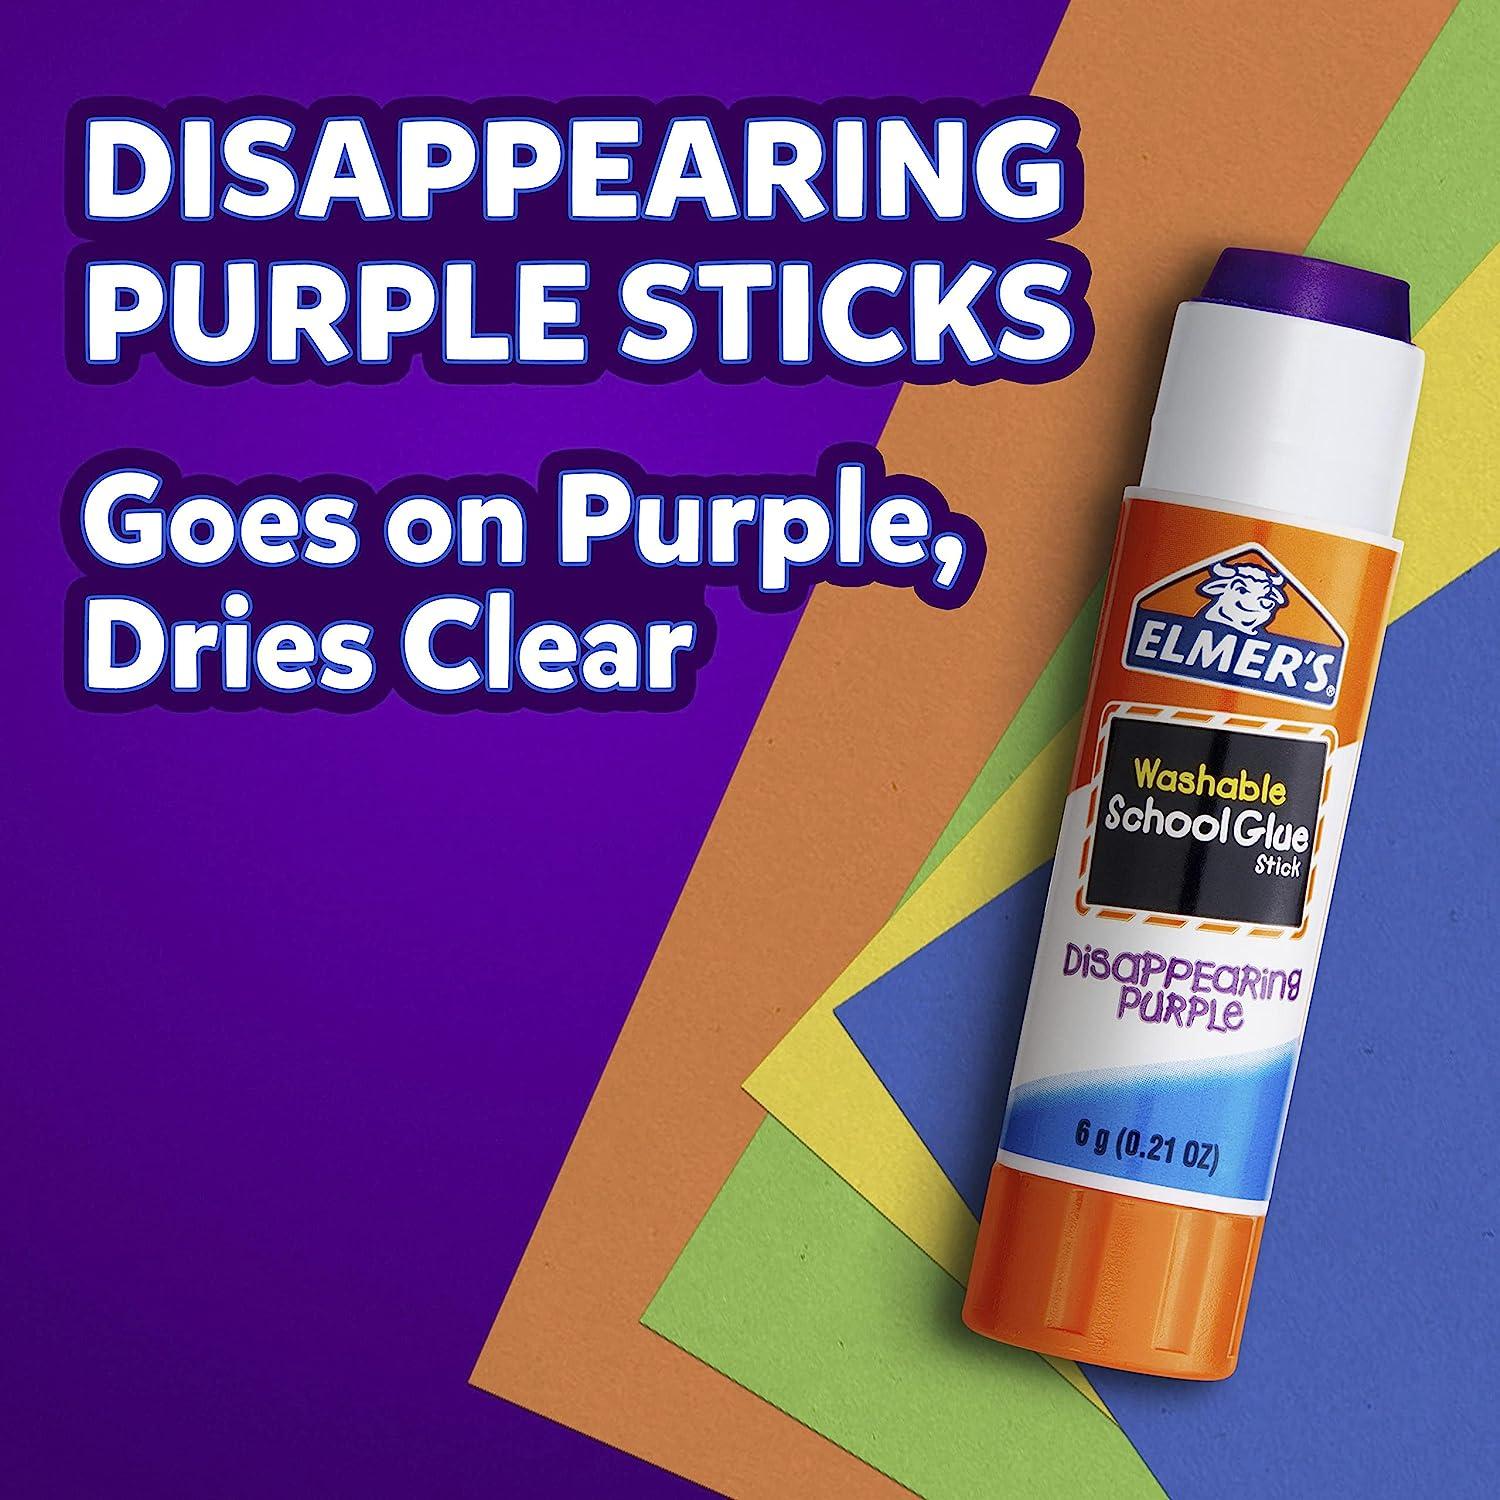 Elmer's Glue Stick 6g Washable Disappearing Purple SchoolGlue Glue Elmers  Glue